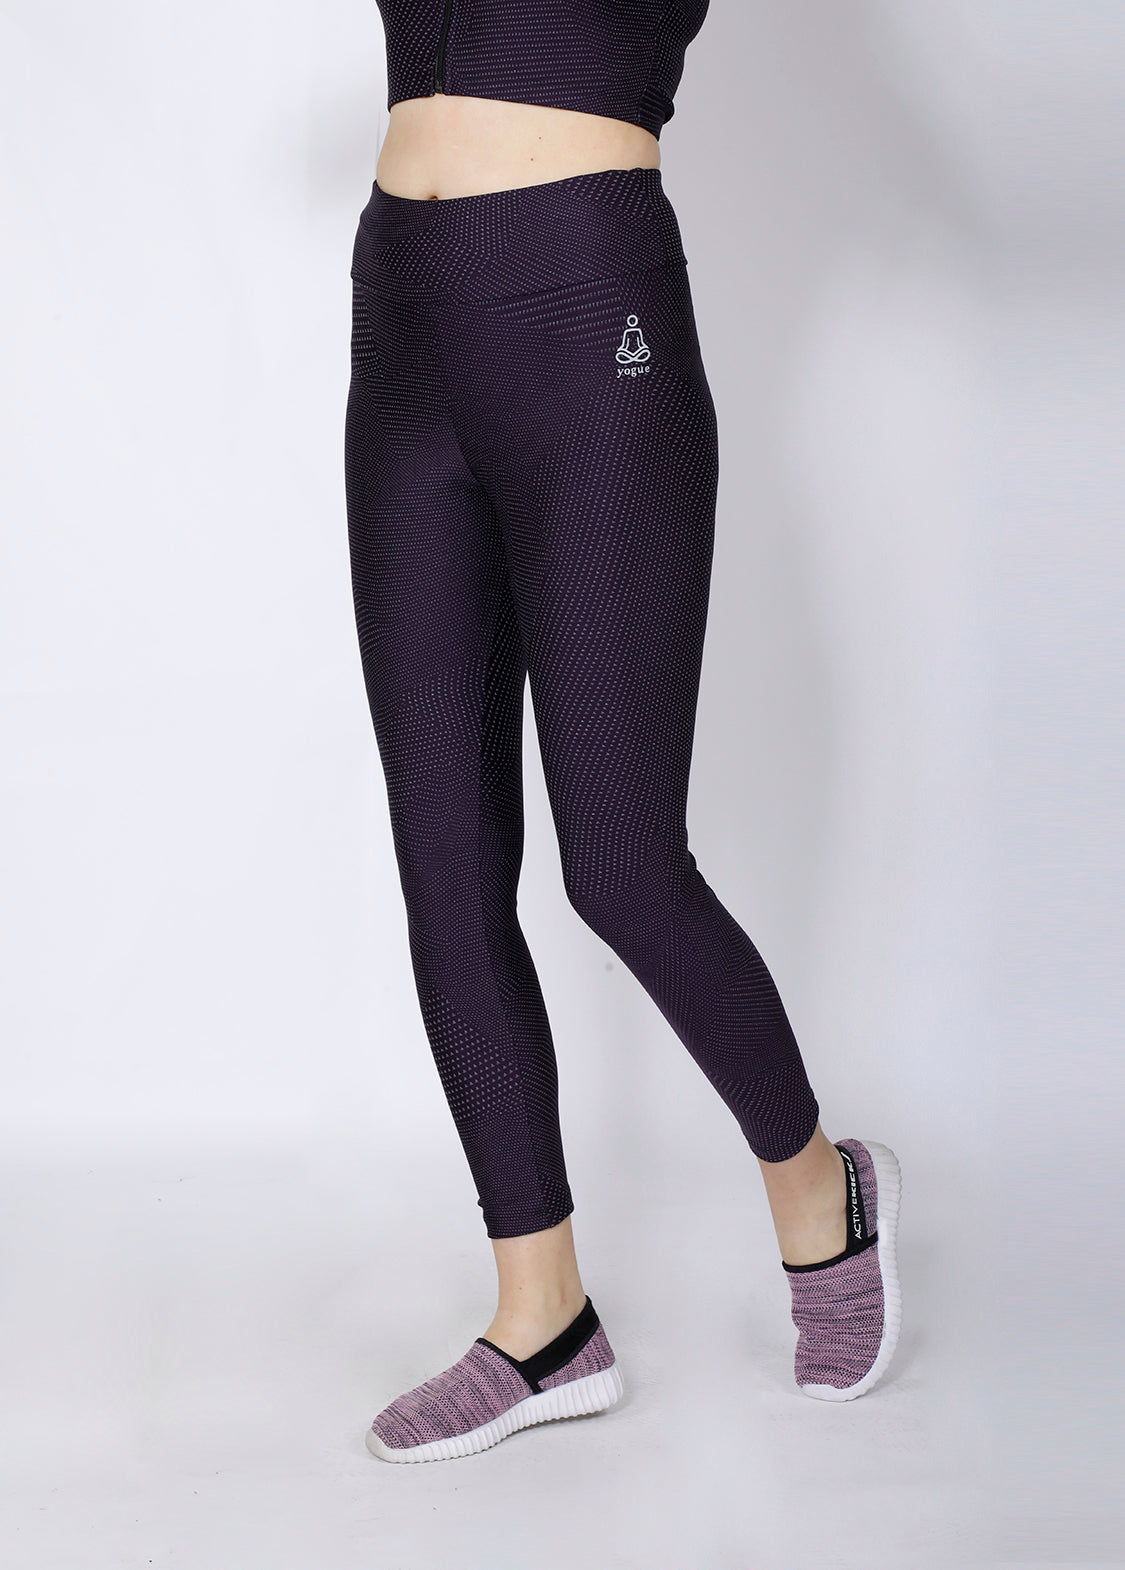 Shop The Look - Crop Zipper + Leggings - Purple Silver - Yogue Activewear